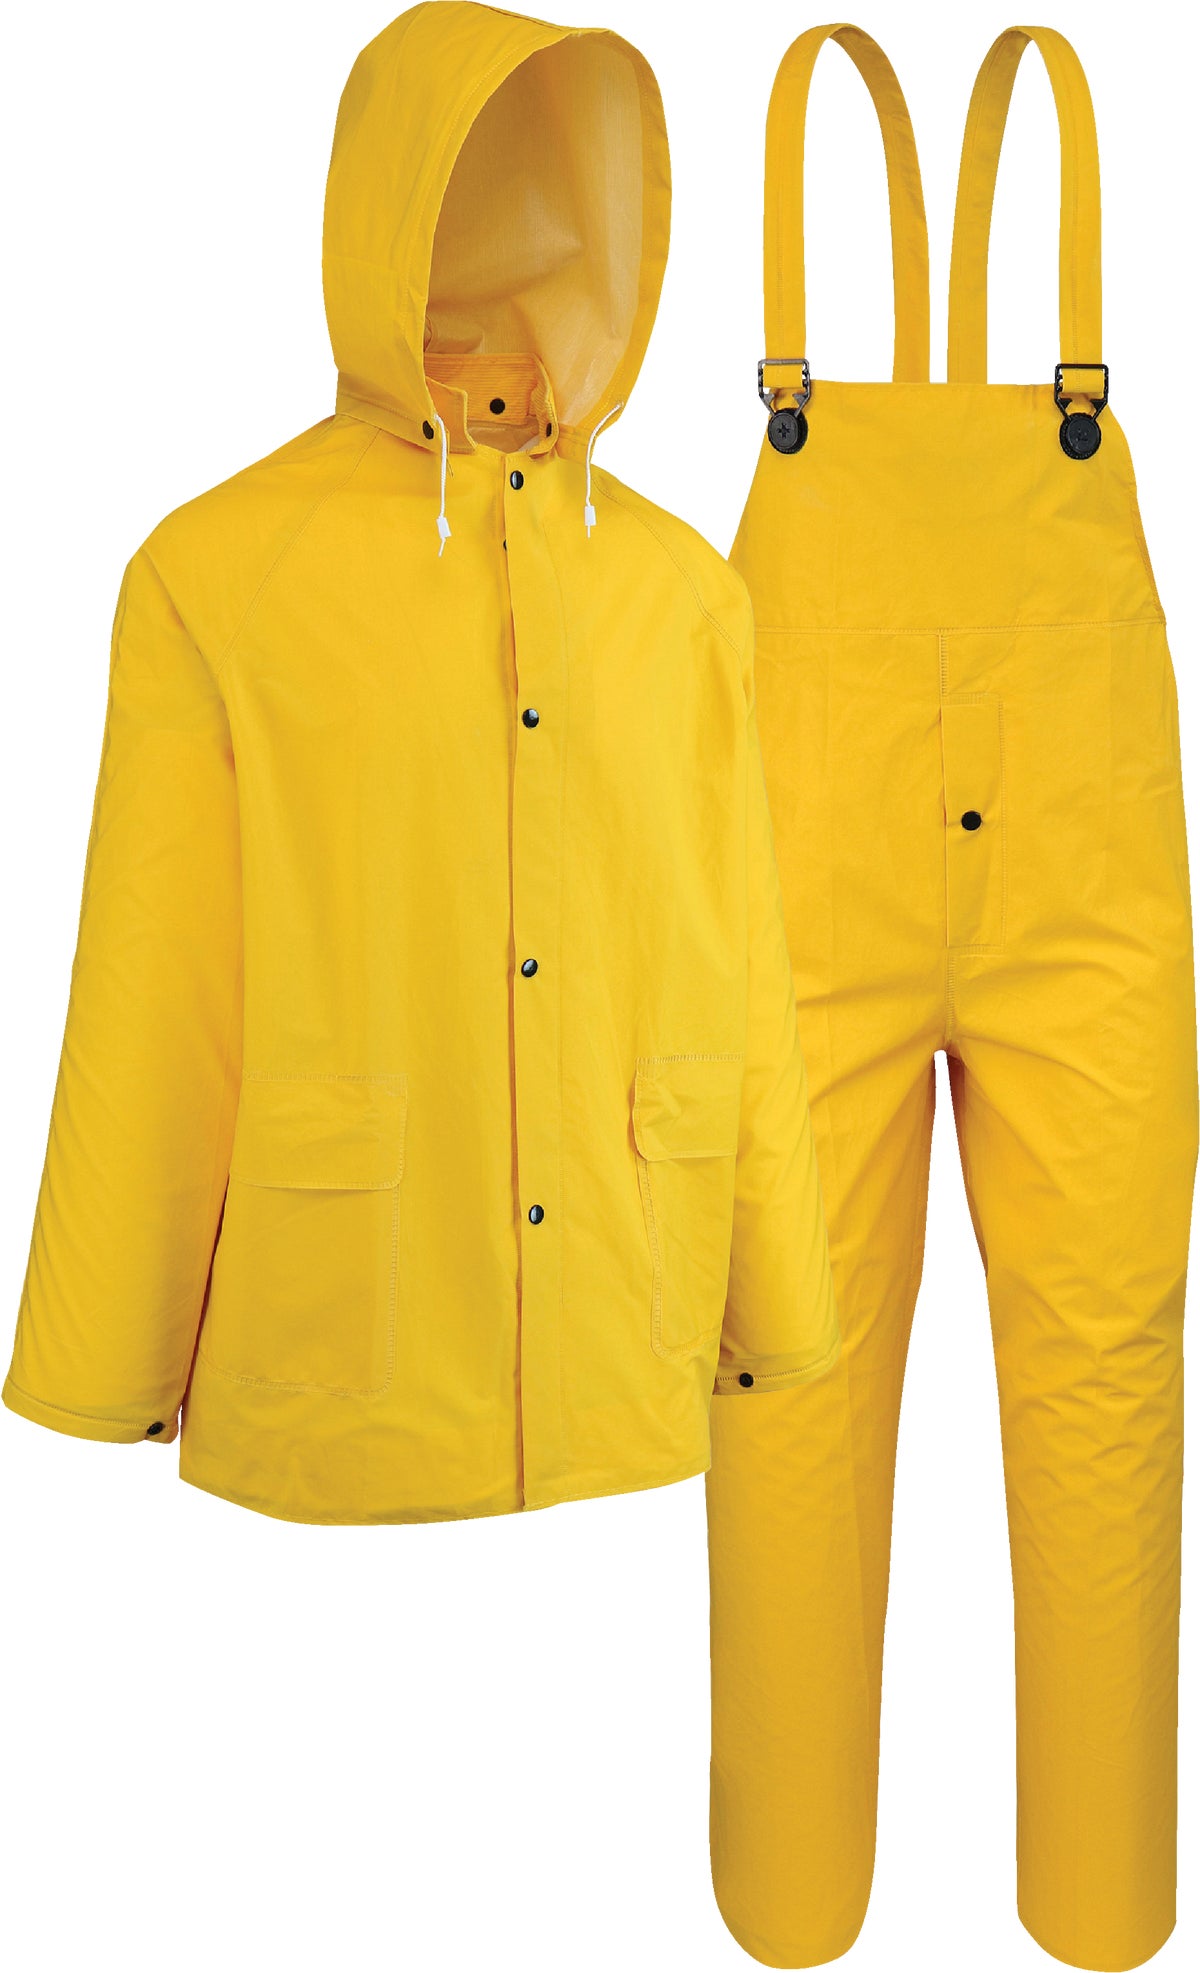 Buy Boss PVC Yellow Rain Suit XL, Yellow